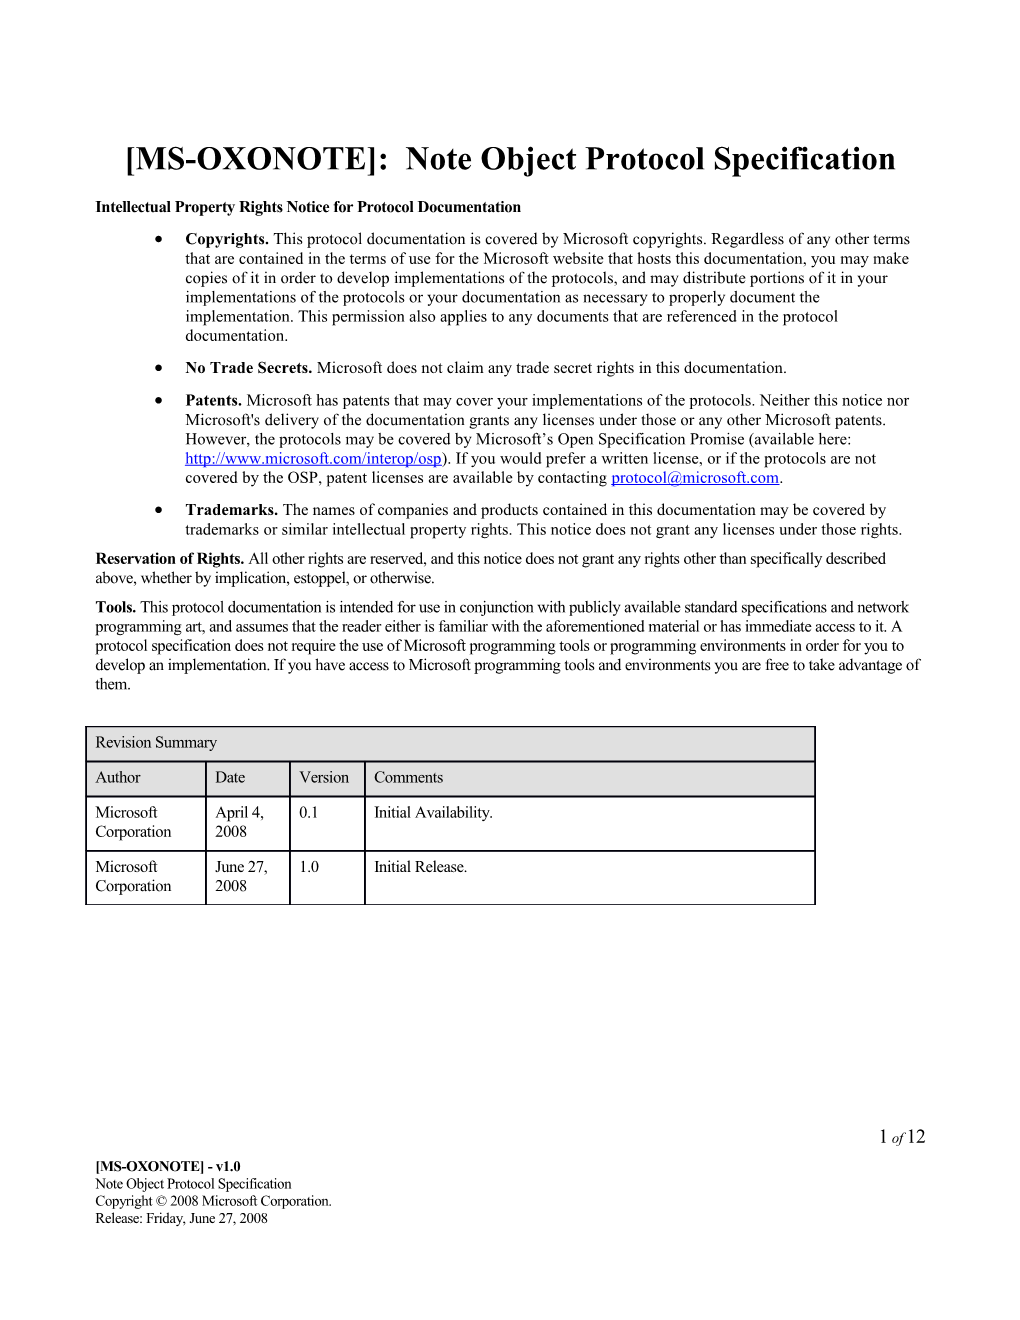 MS-OXONOTE : Note Object Protocol Specification